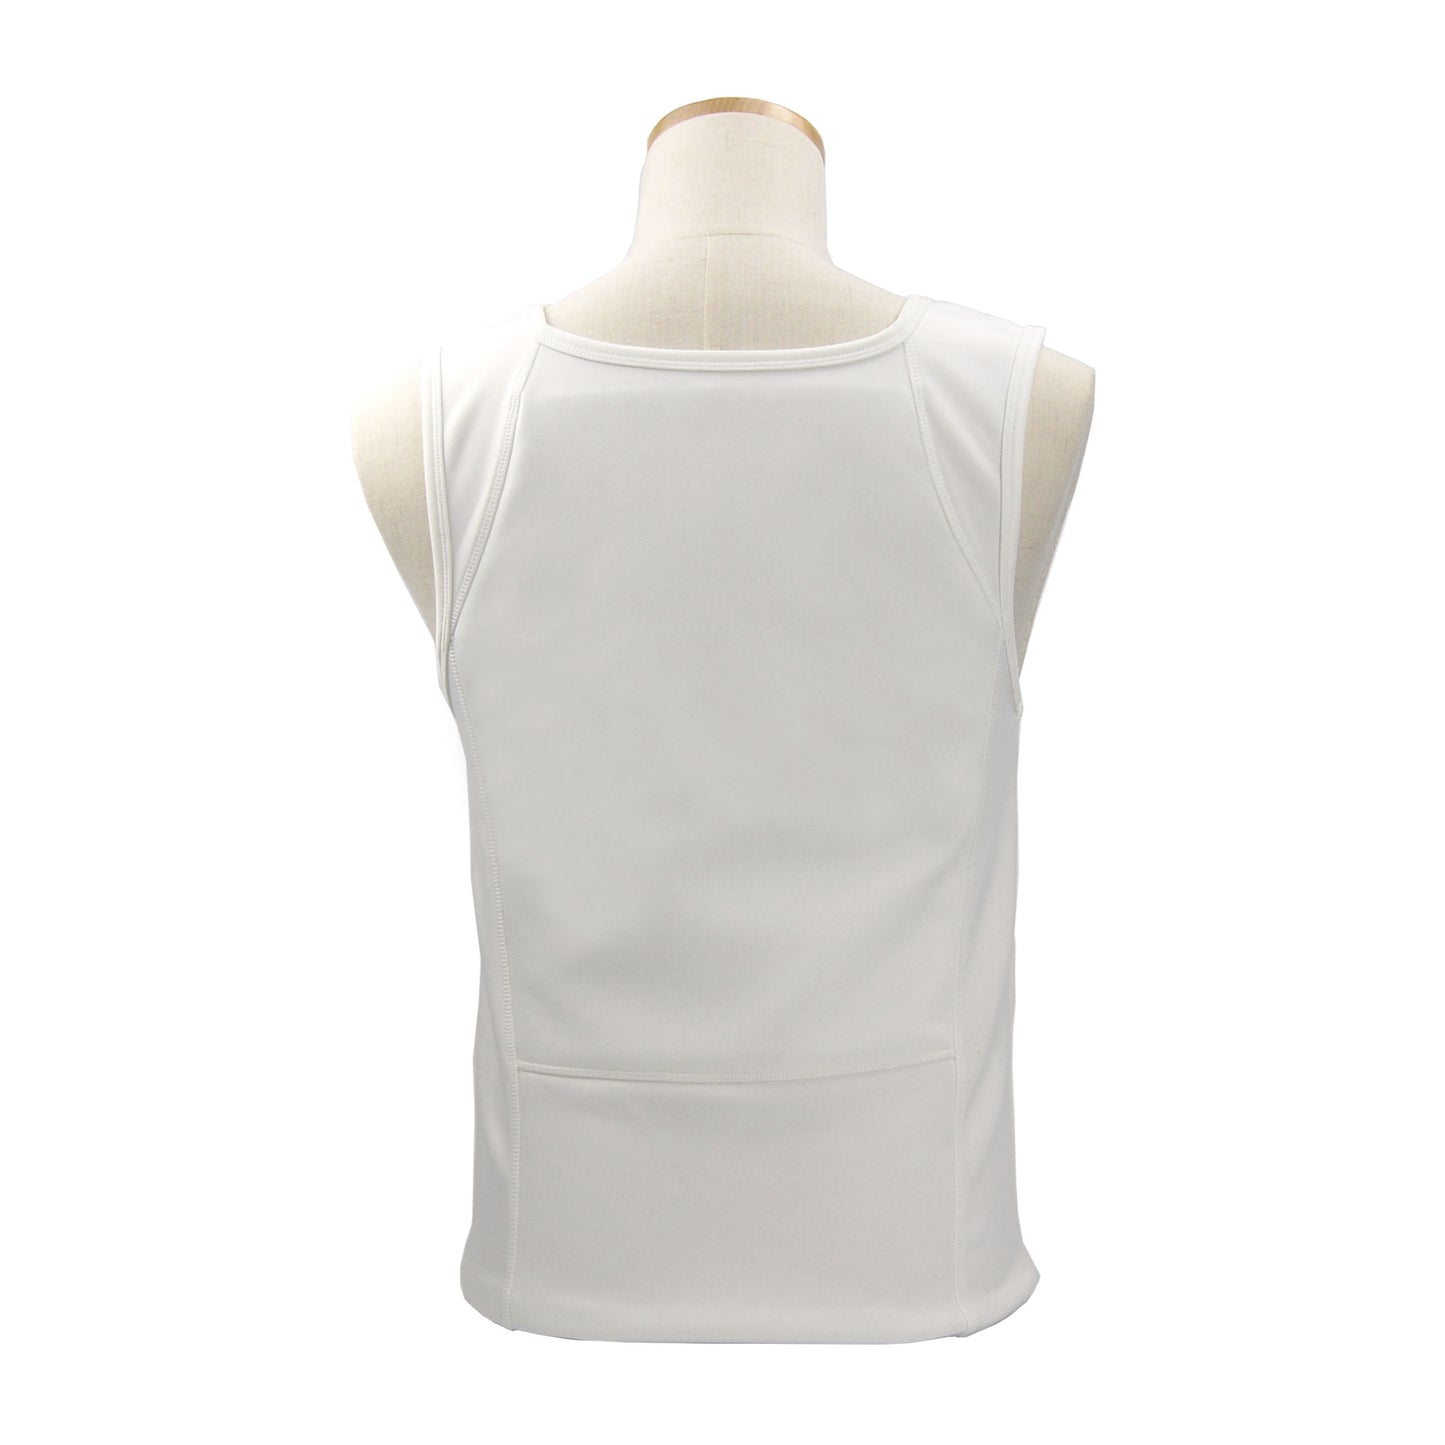 CompassArmor Ultra Thin Kevlar Body Armor T shirt Vest Level 3A